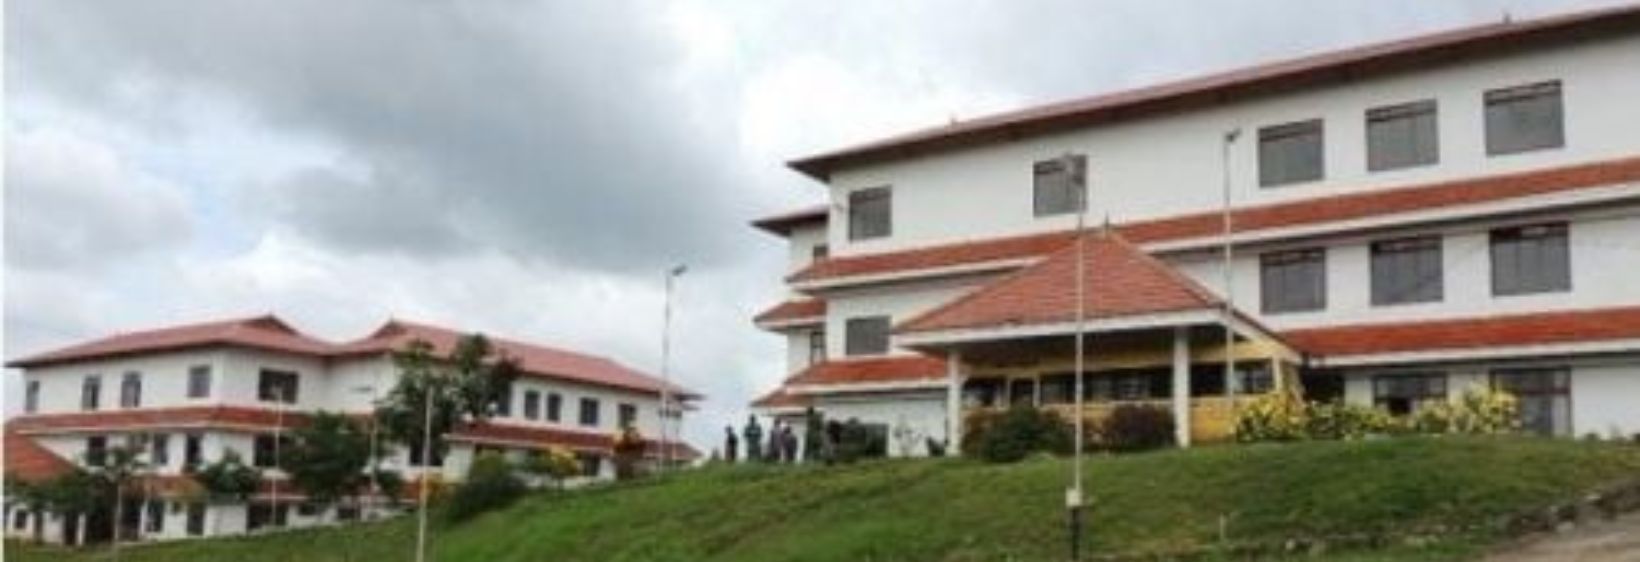 Co - Operative College of Nursing - Thiruvananthapuram